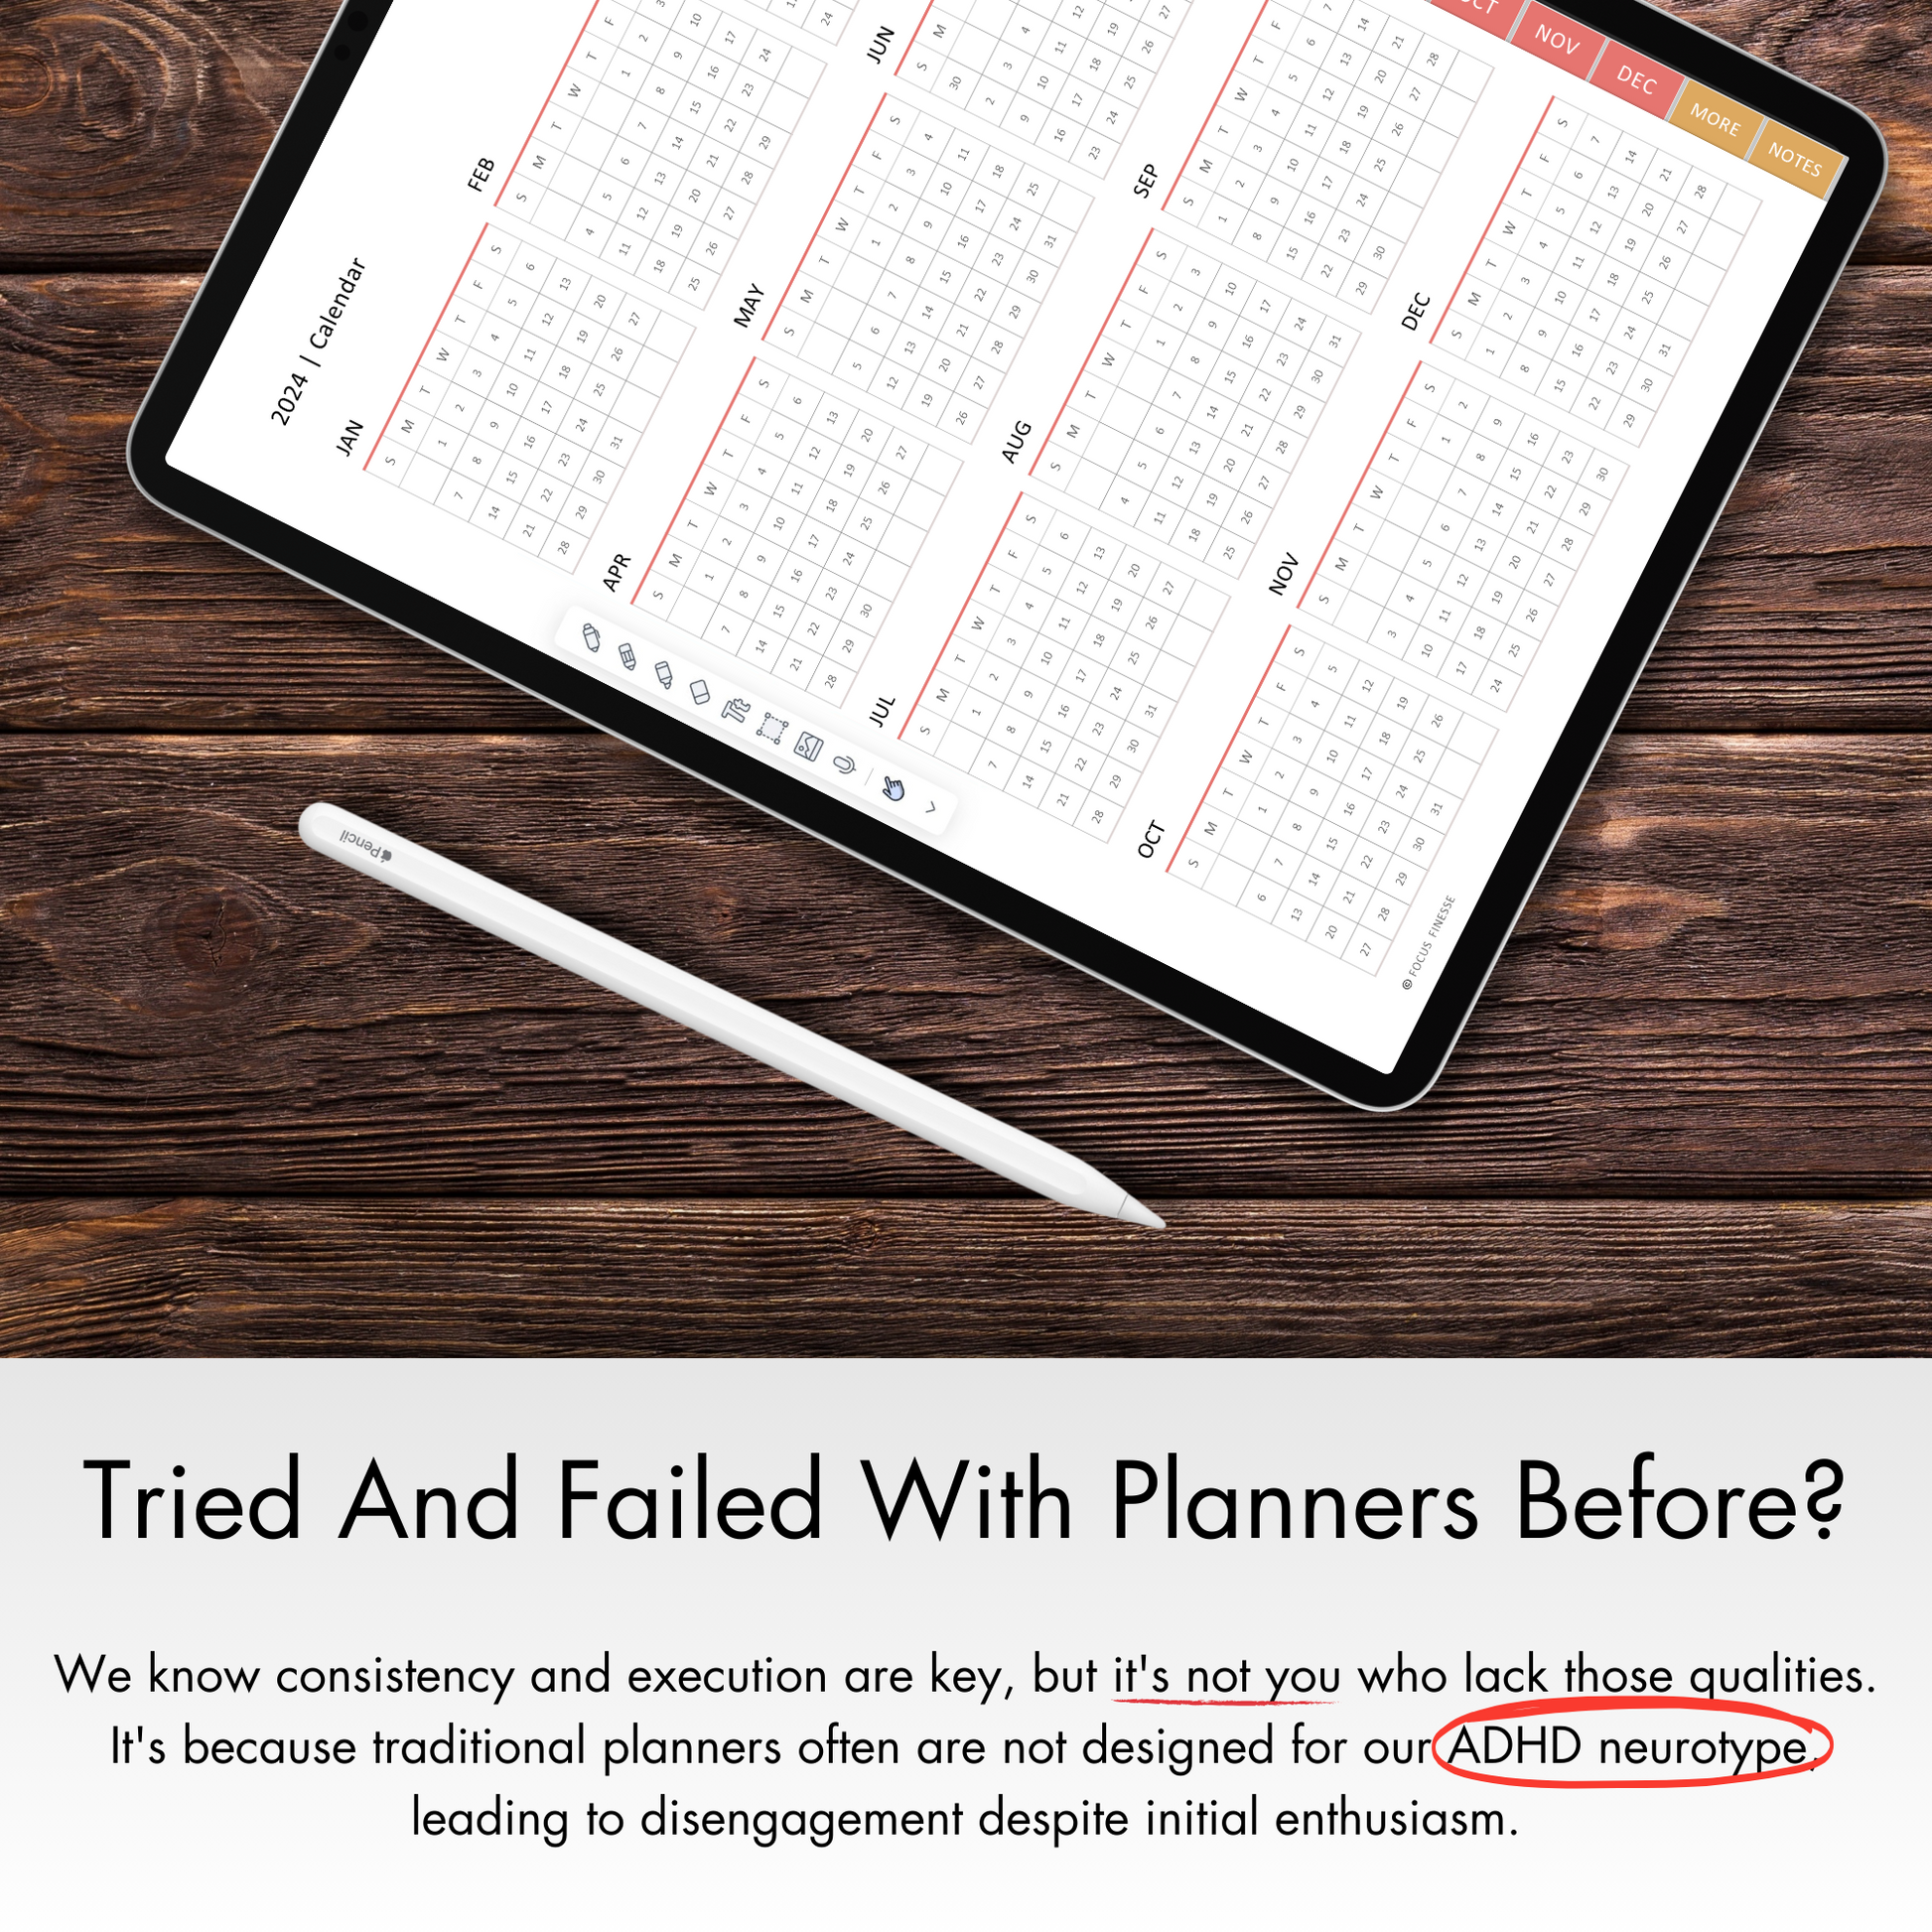 Digital Planner for iPad.